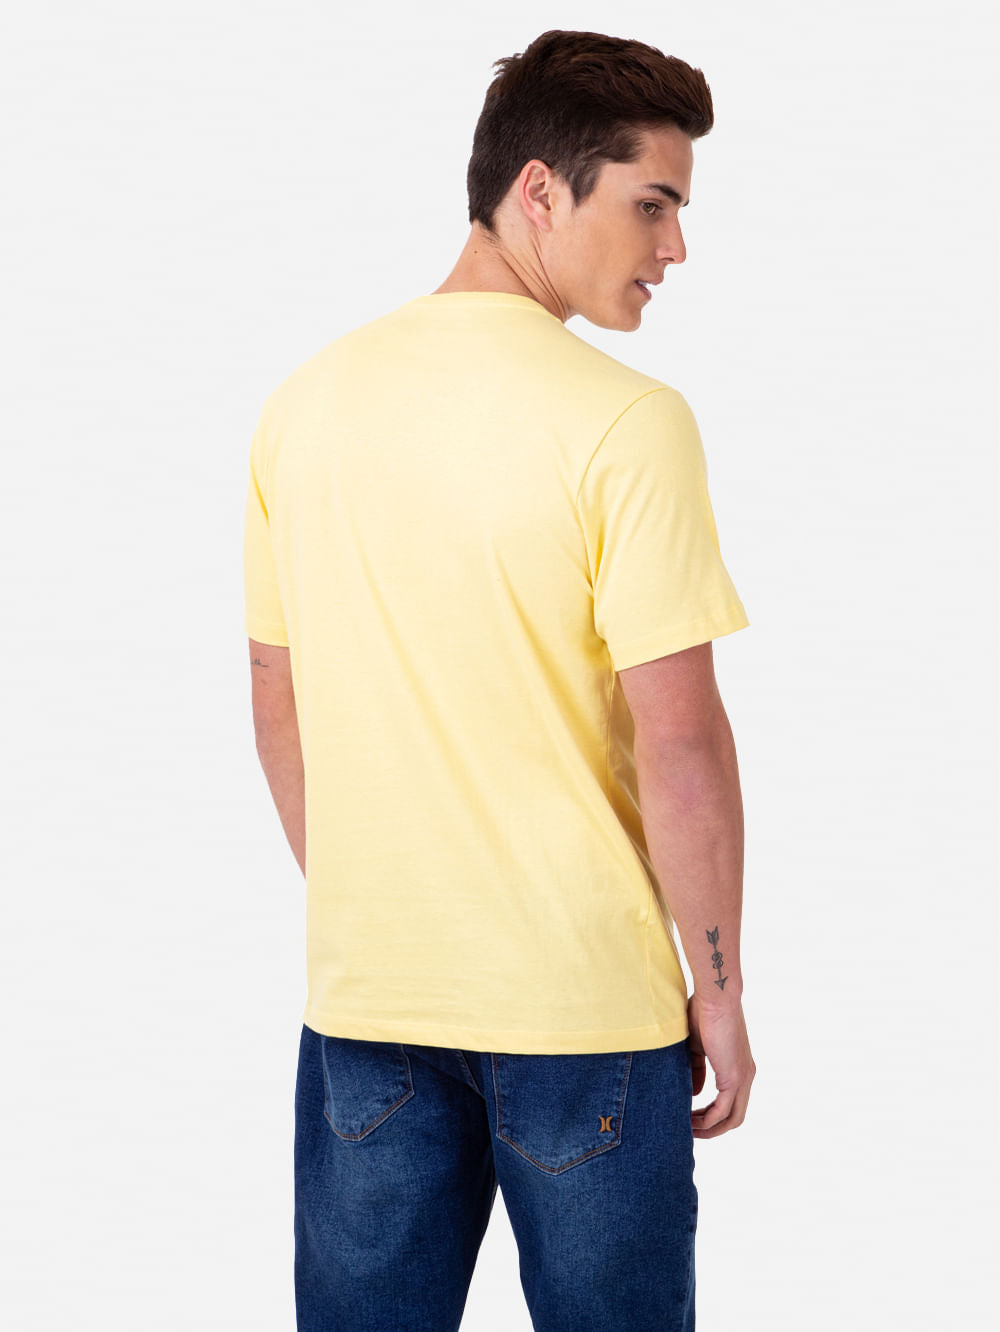 Camiseta Hurley Waves Amarela